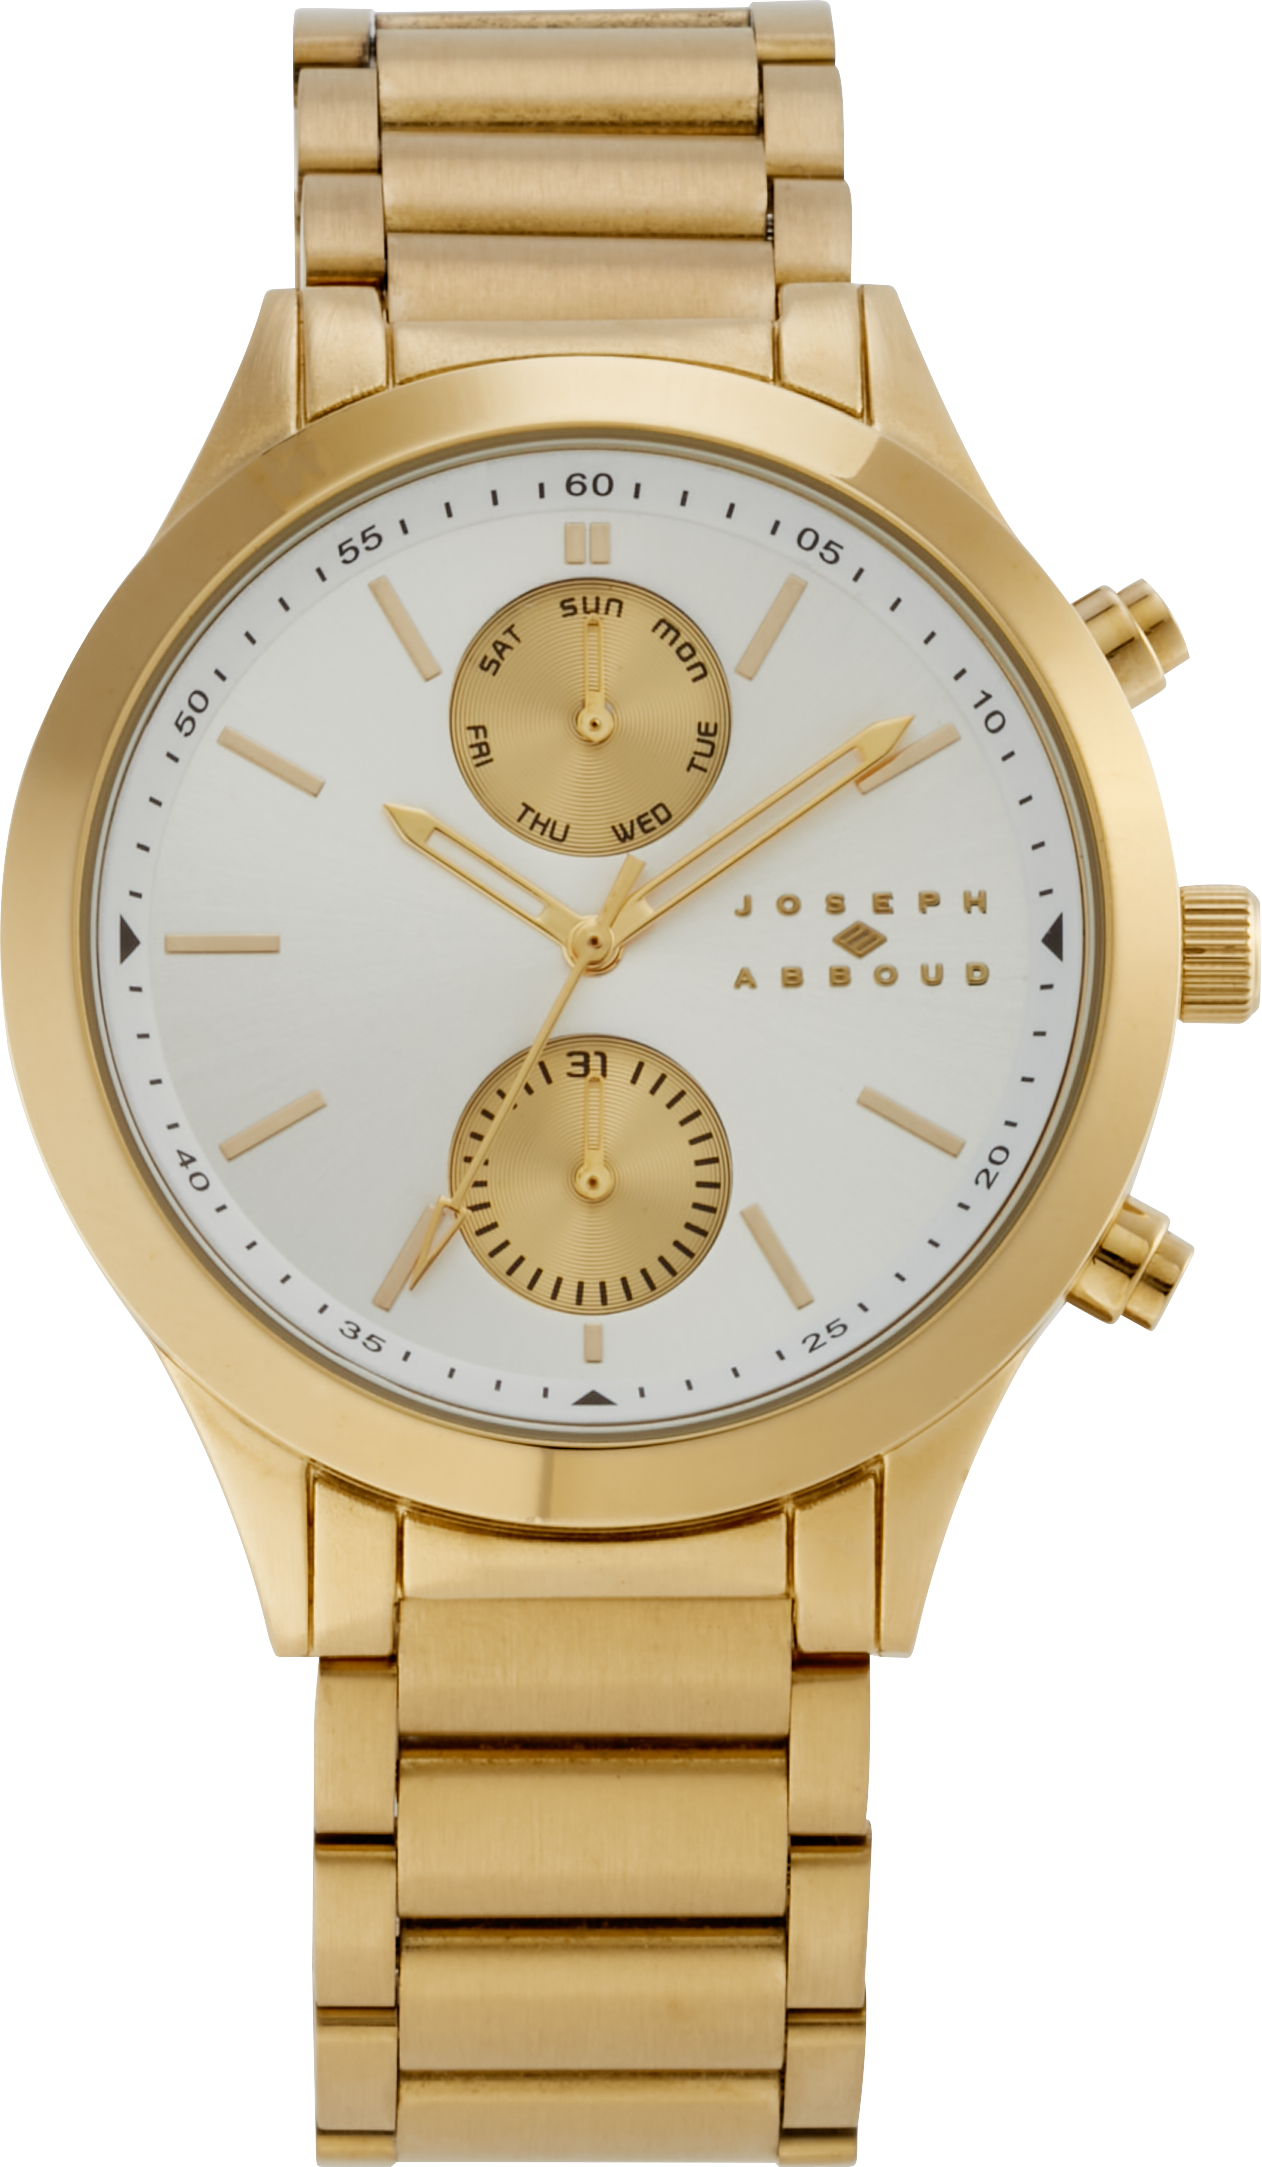 Joseph Abboud Watch, Gold & White